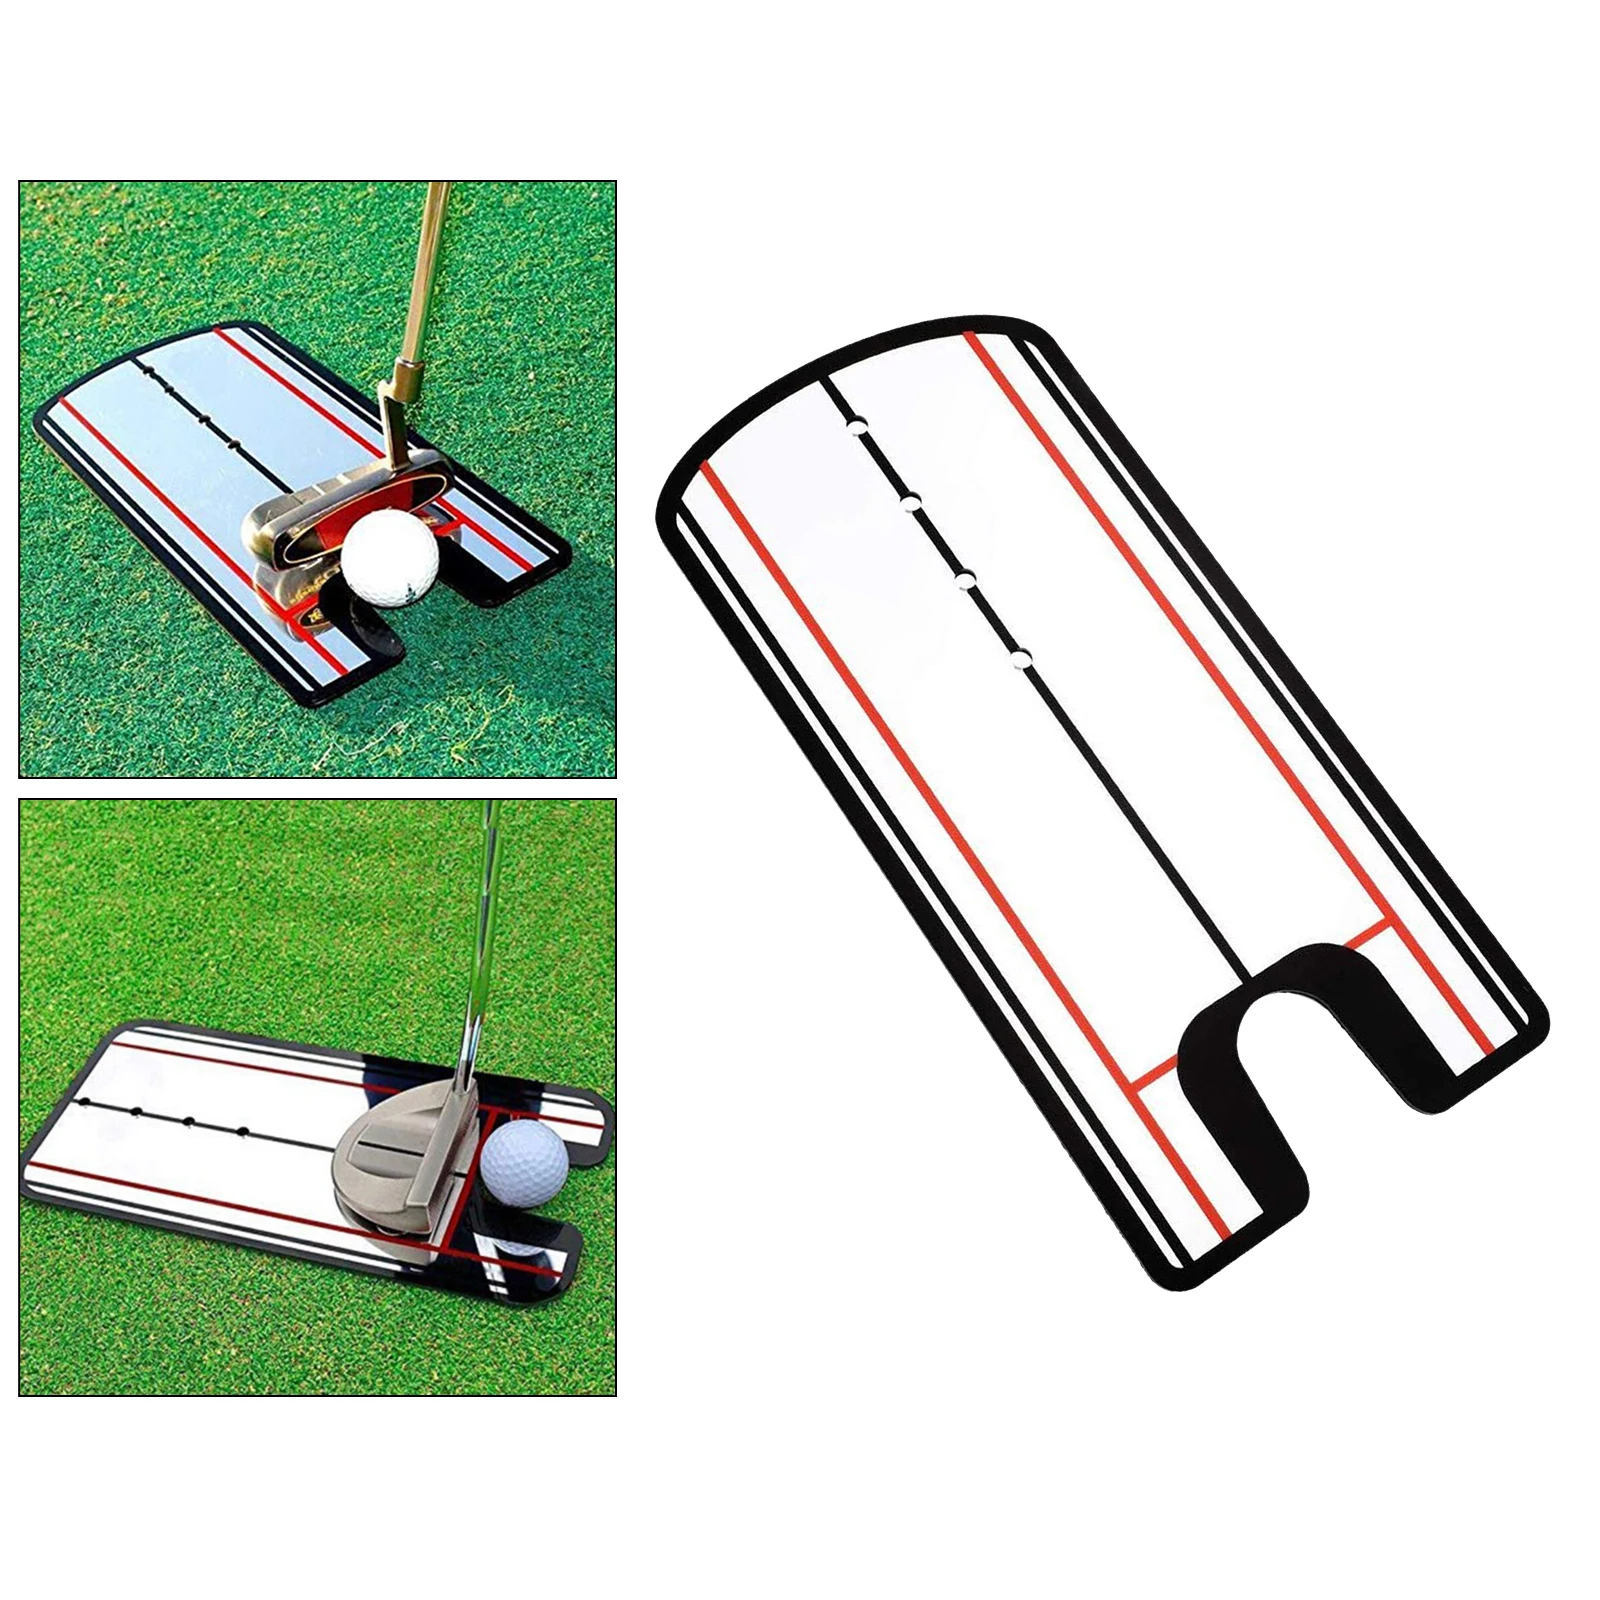 Golf Putting Alignment Mirror Swing Training Aids Practice Posture Trainer